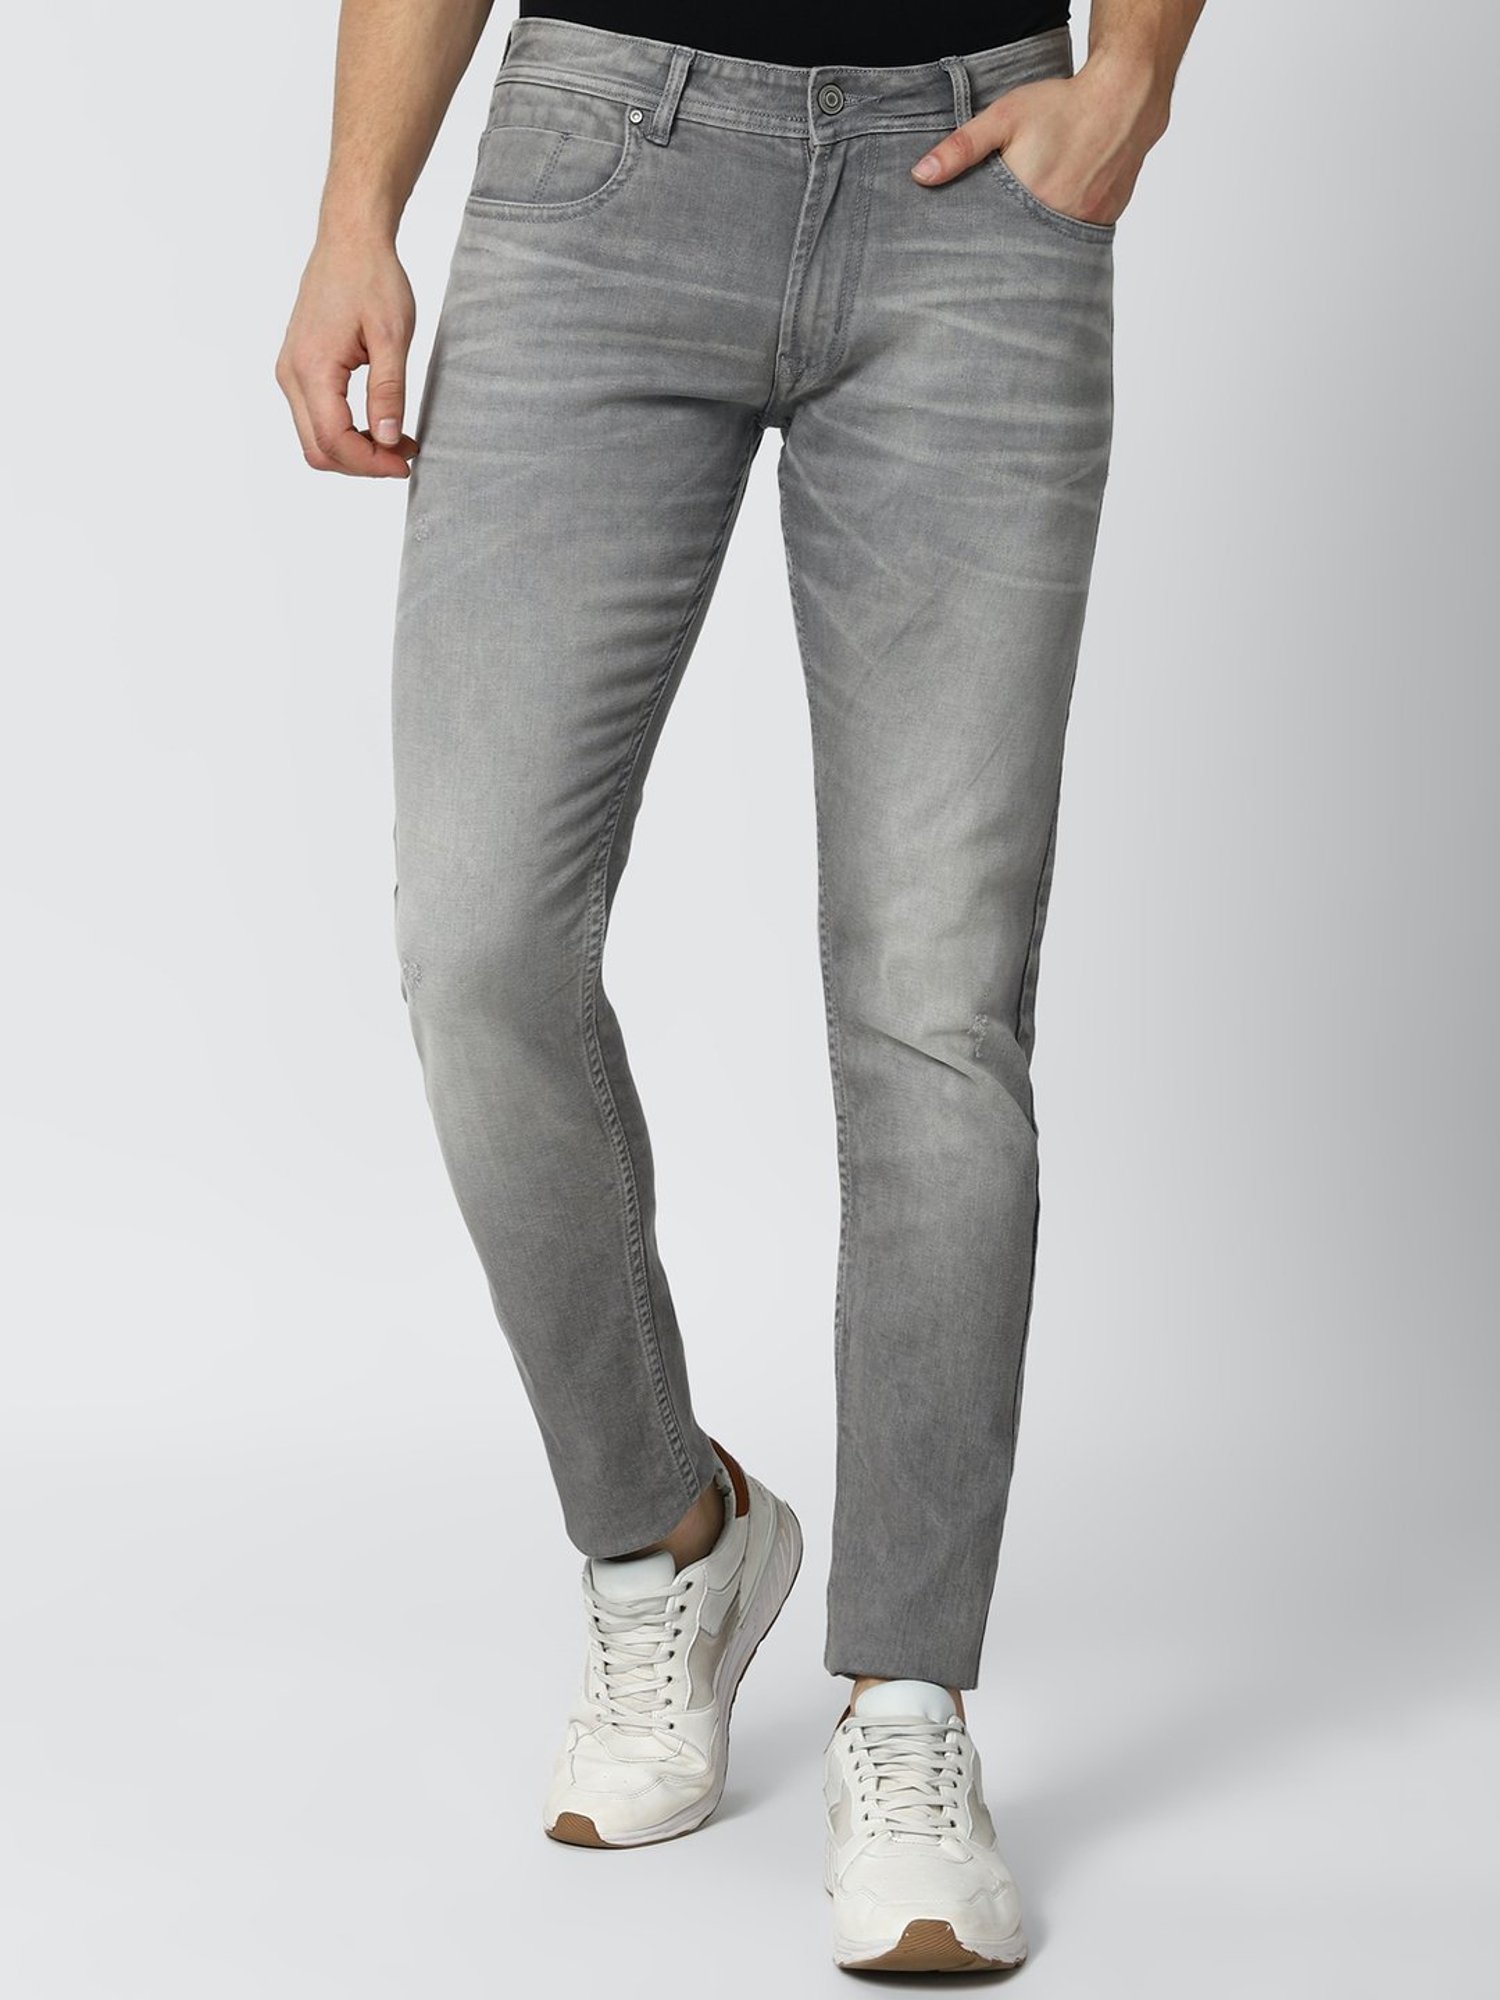 People by Pantaloons Grey Slim Fit Jeans